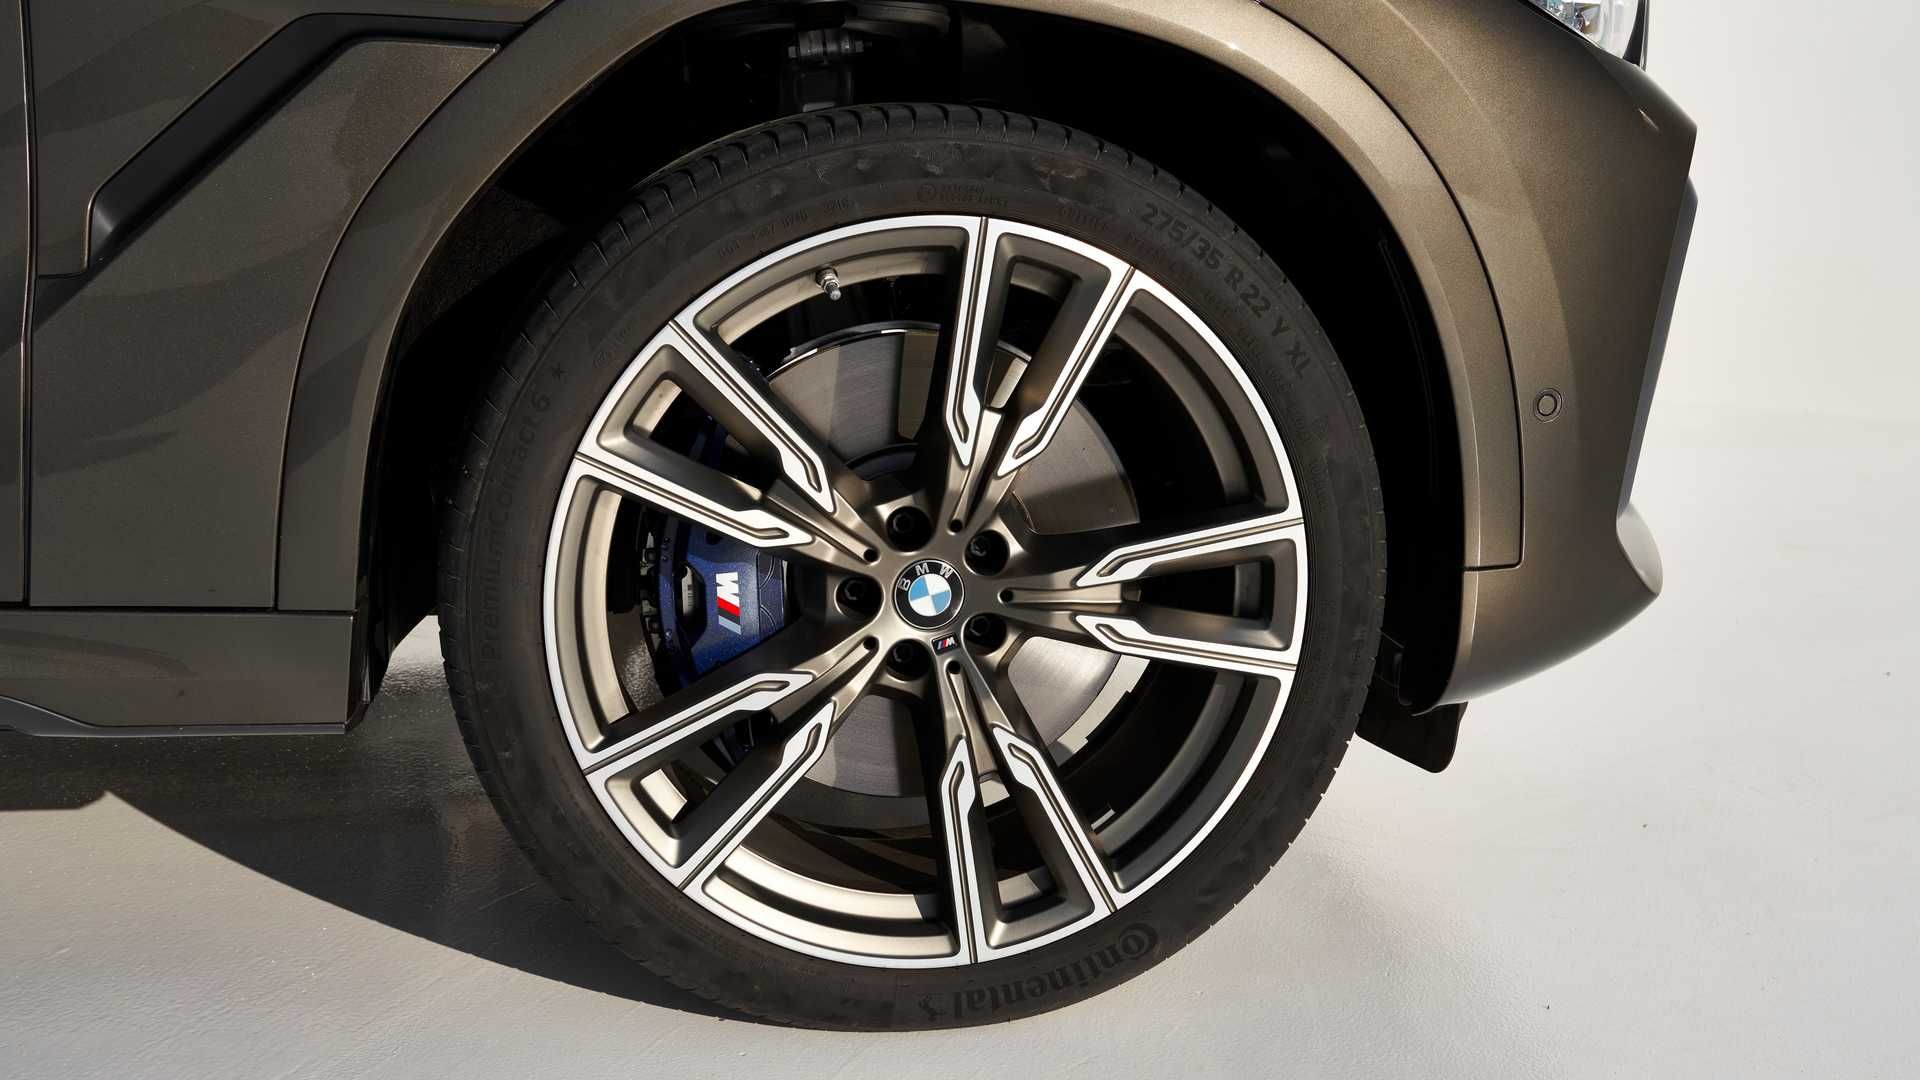 2020 BMW X6 / بی ام و ایکس 6 مدل ۲۰۲۰